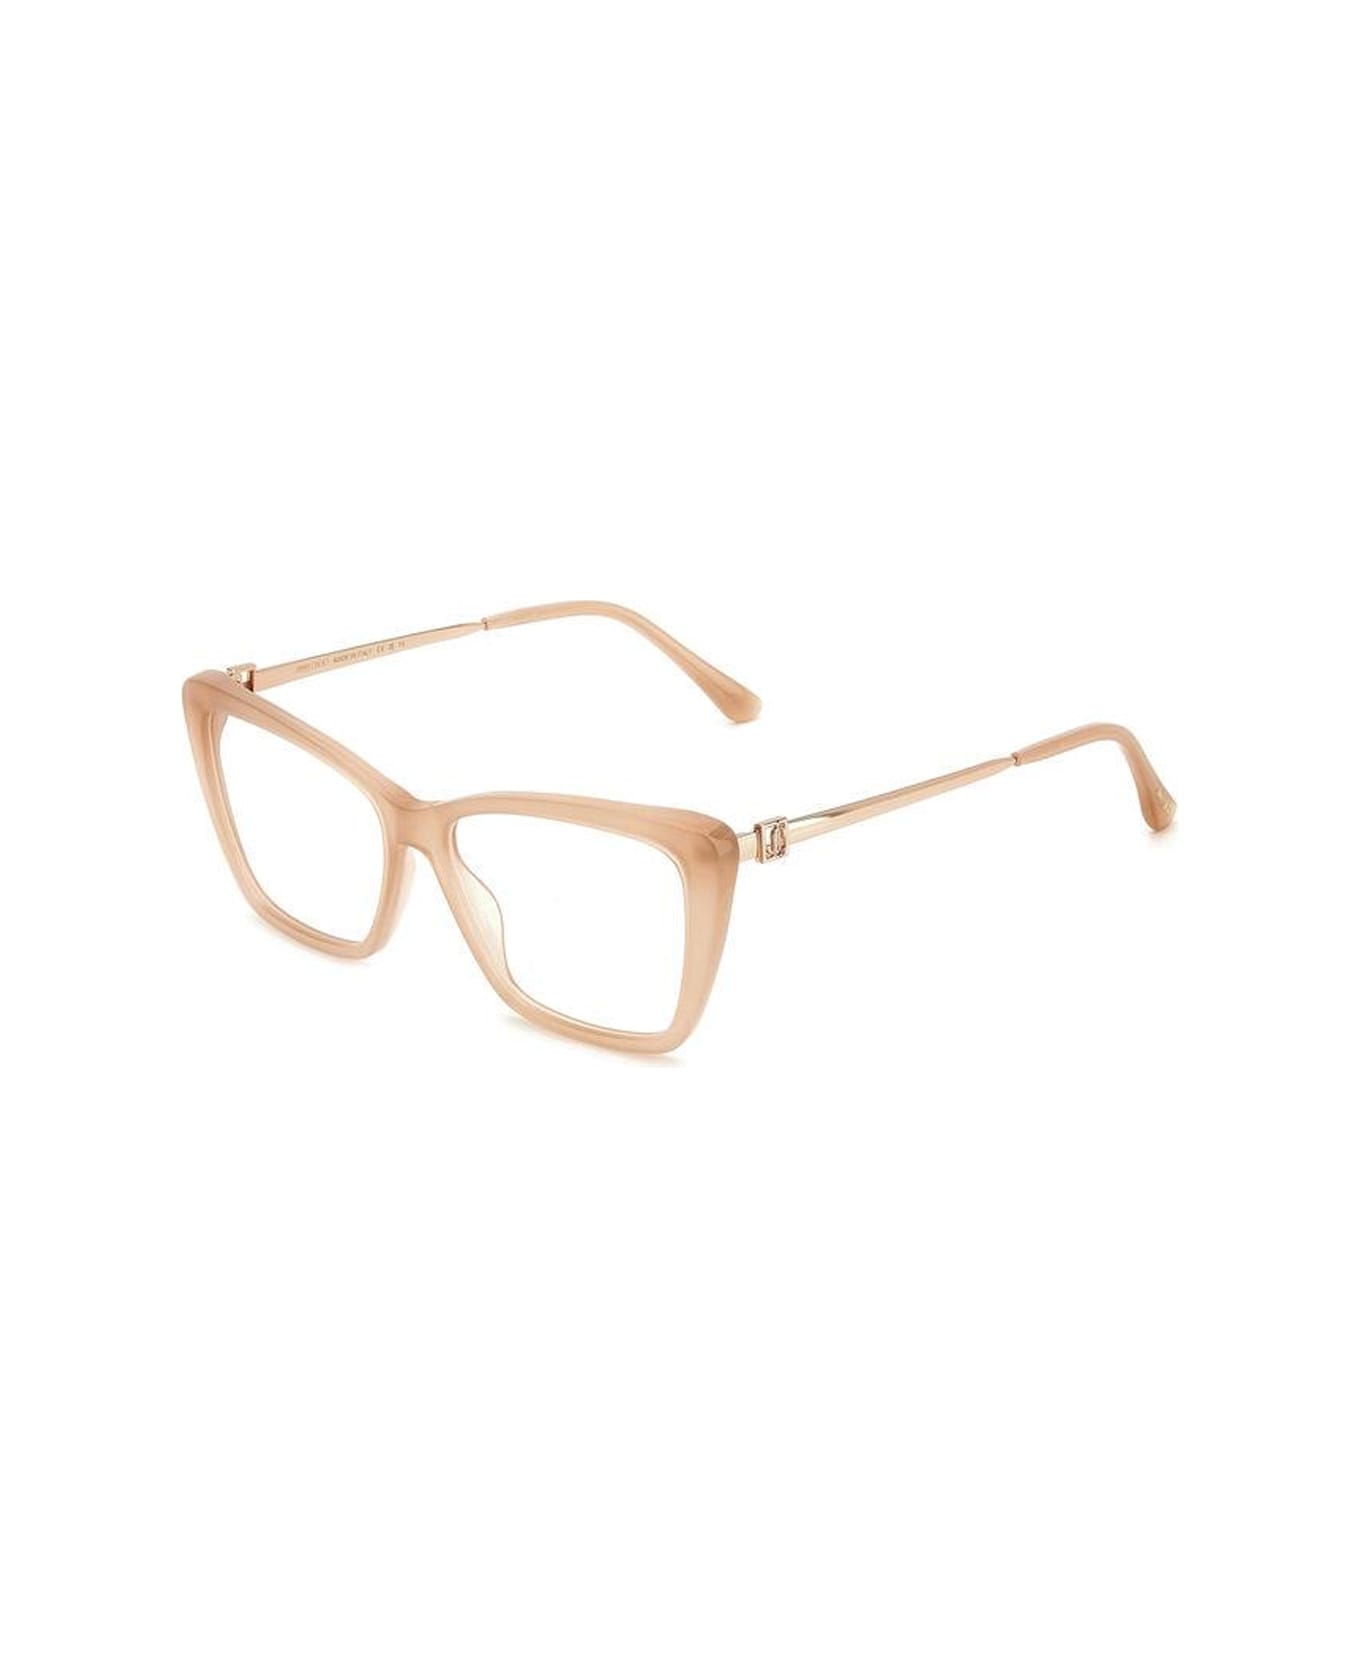 Jimmy Choo Eyewear Jc375 Fwm/15 Glasses - Rosa